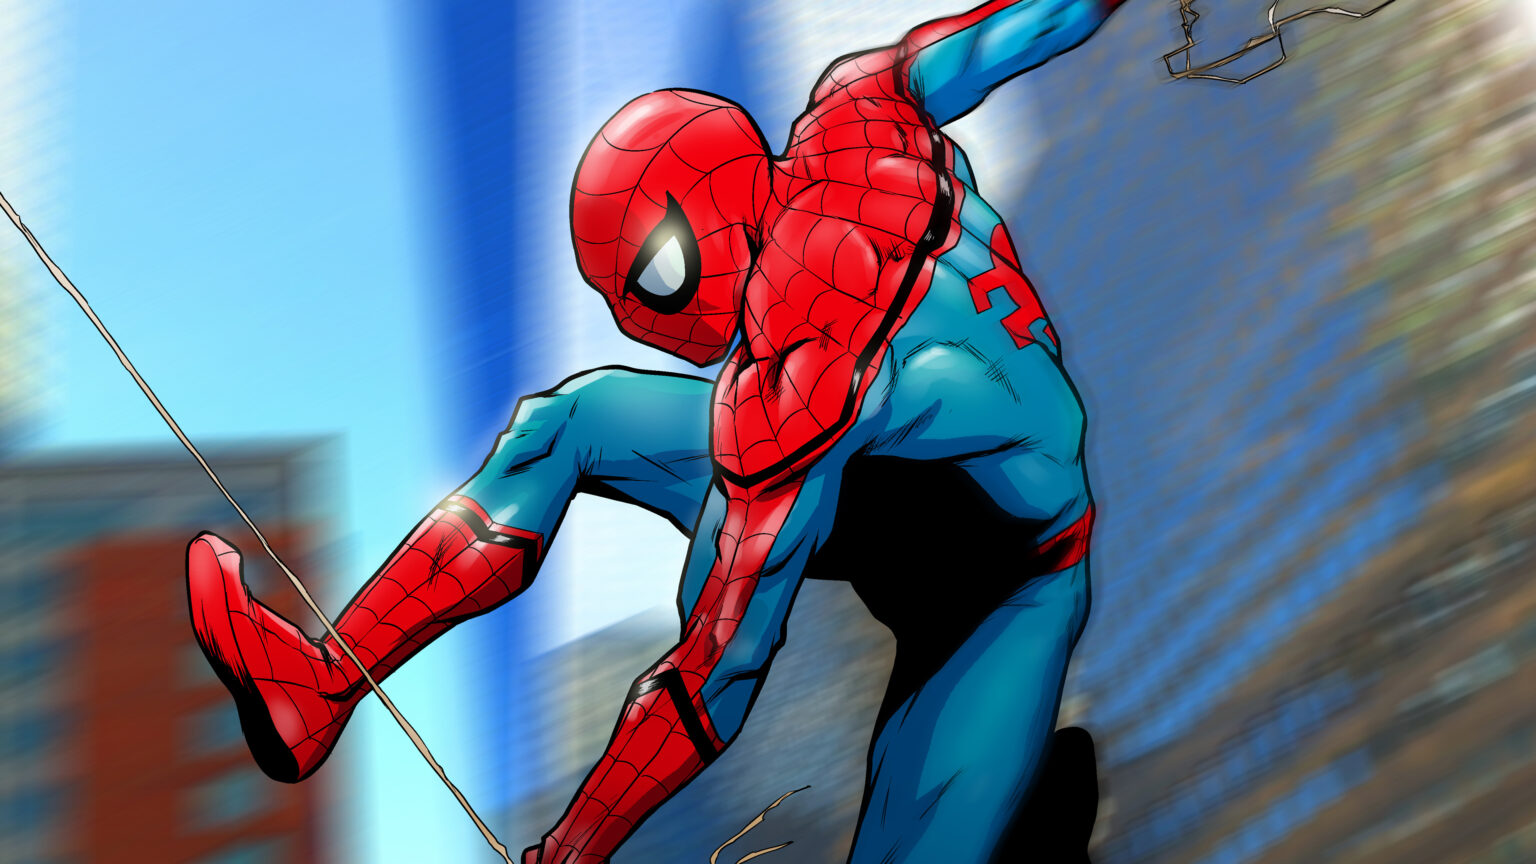 Spiderman ArtWork 4k